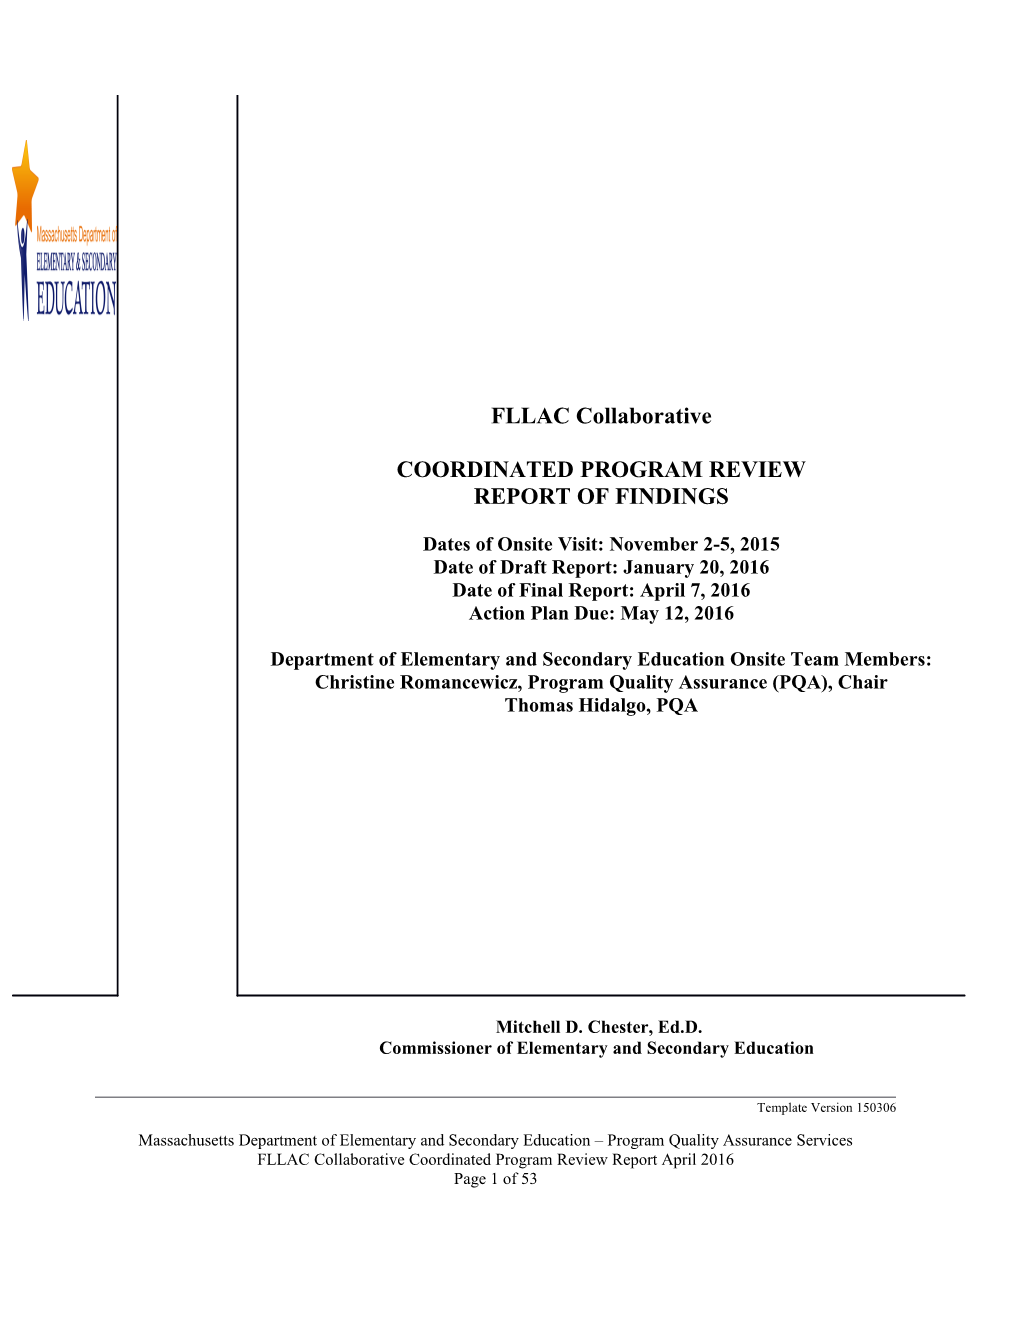 FLLAC Collaborative CPR Final Report